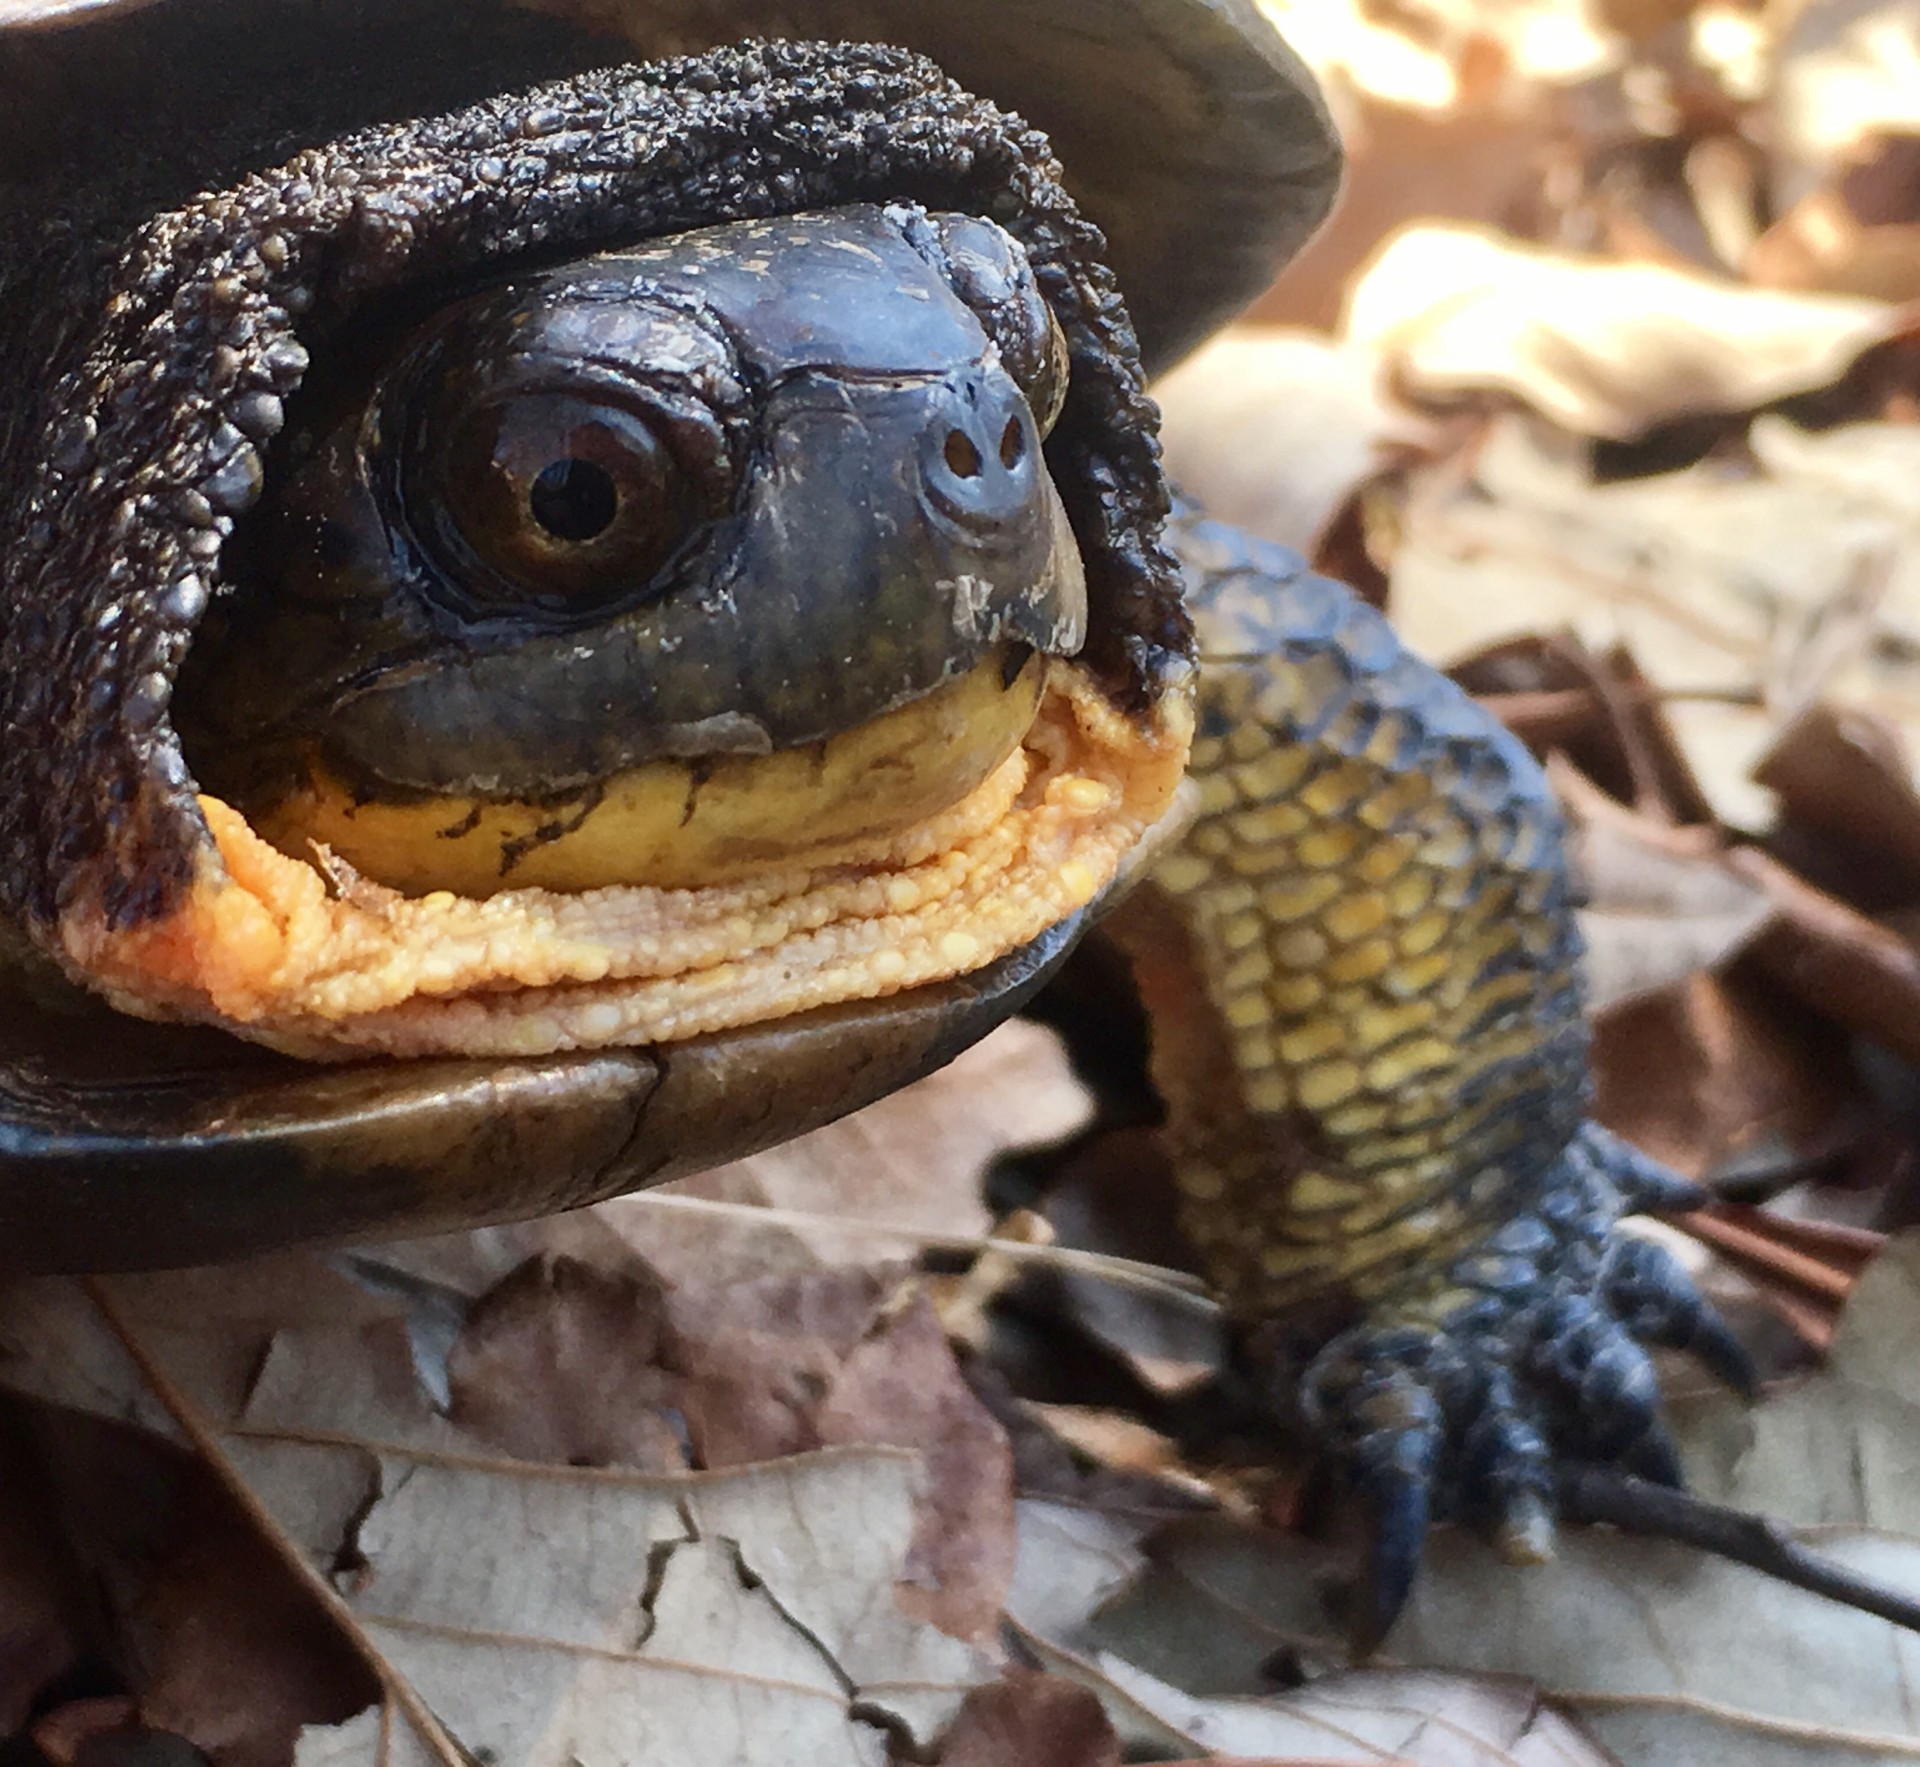 Blanding's turtle, photo by Melissa Fadden